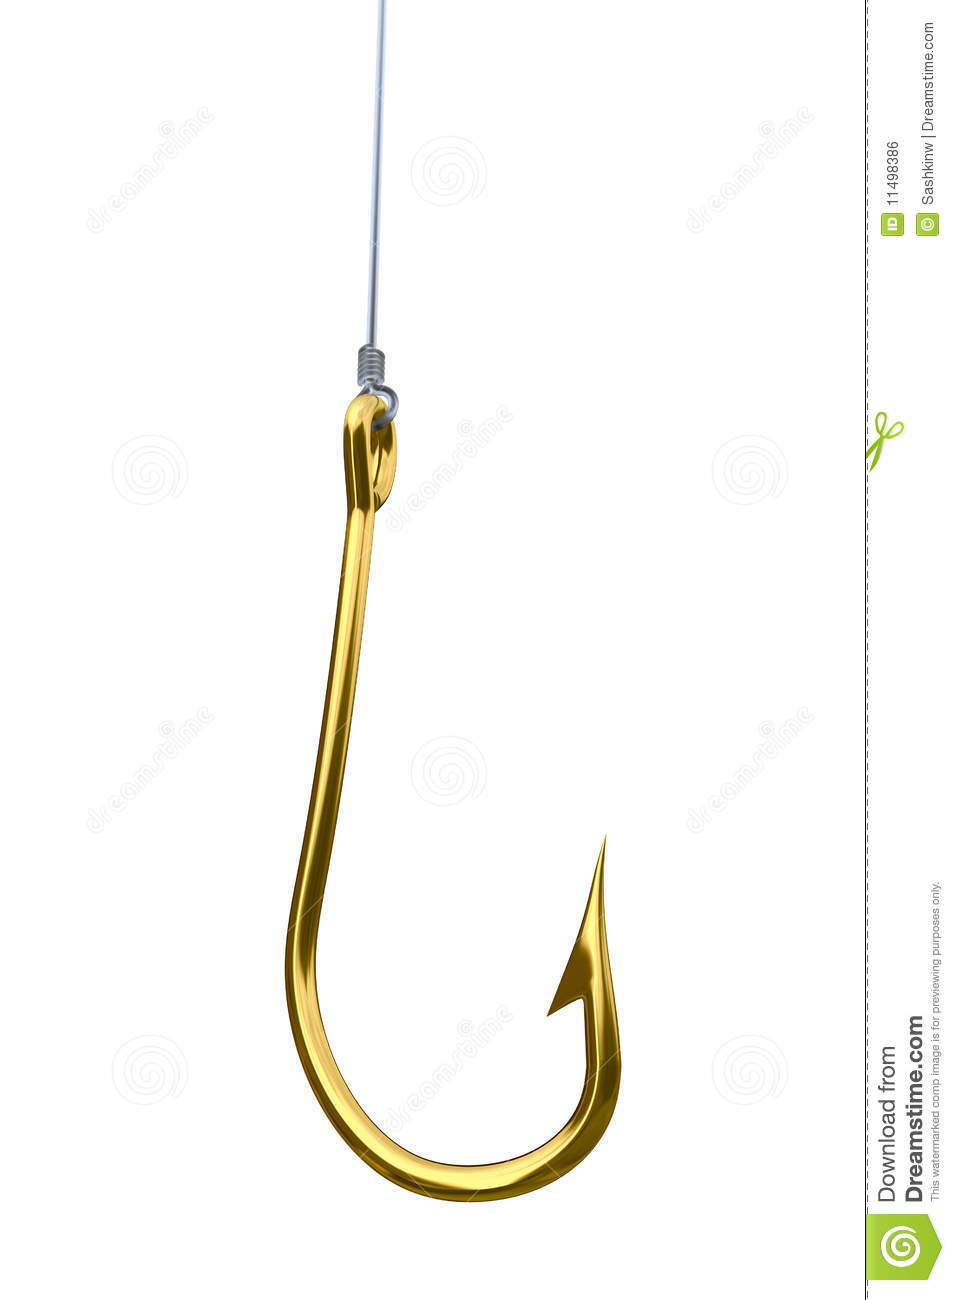 Gold Fishing Hook Royalty Free Stock Image   Image  11498386